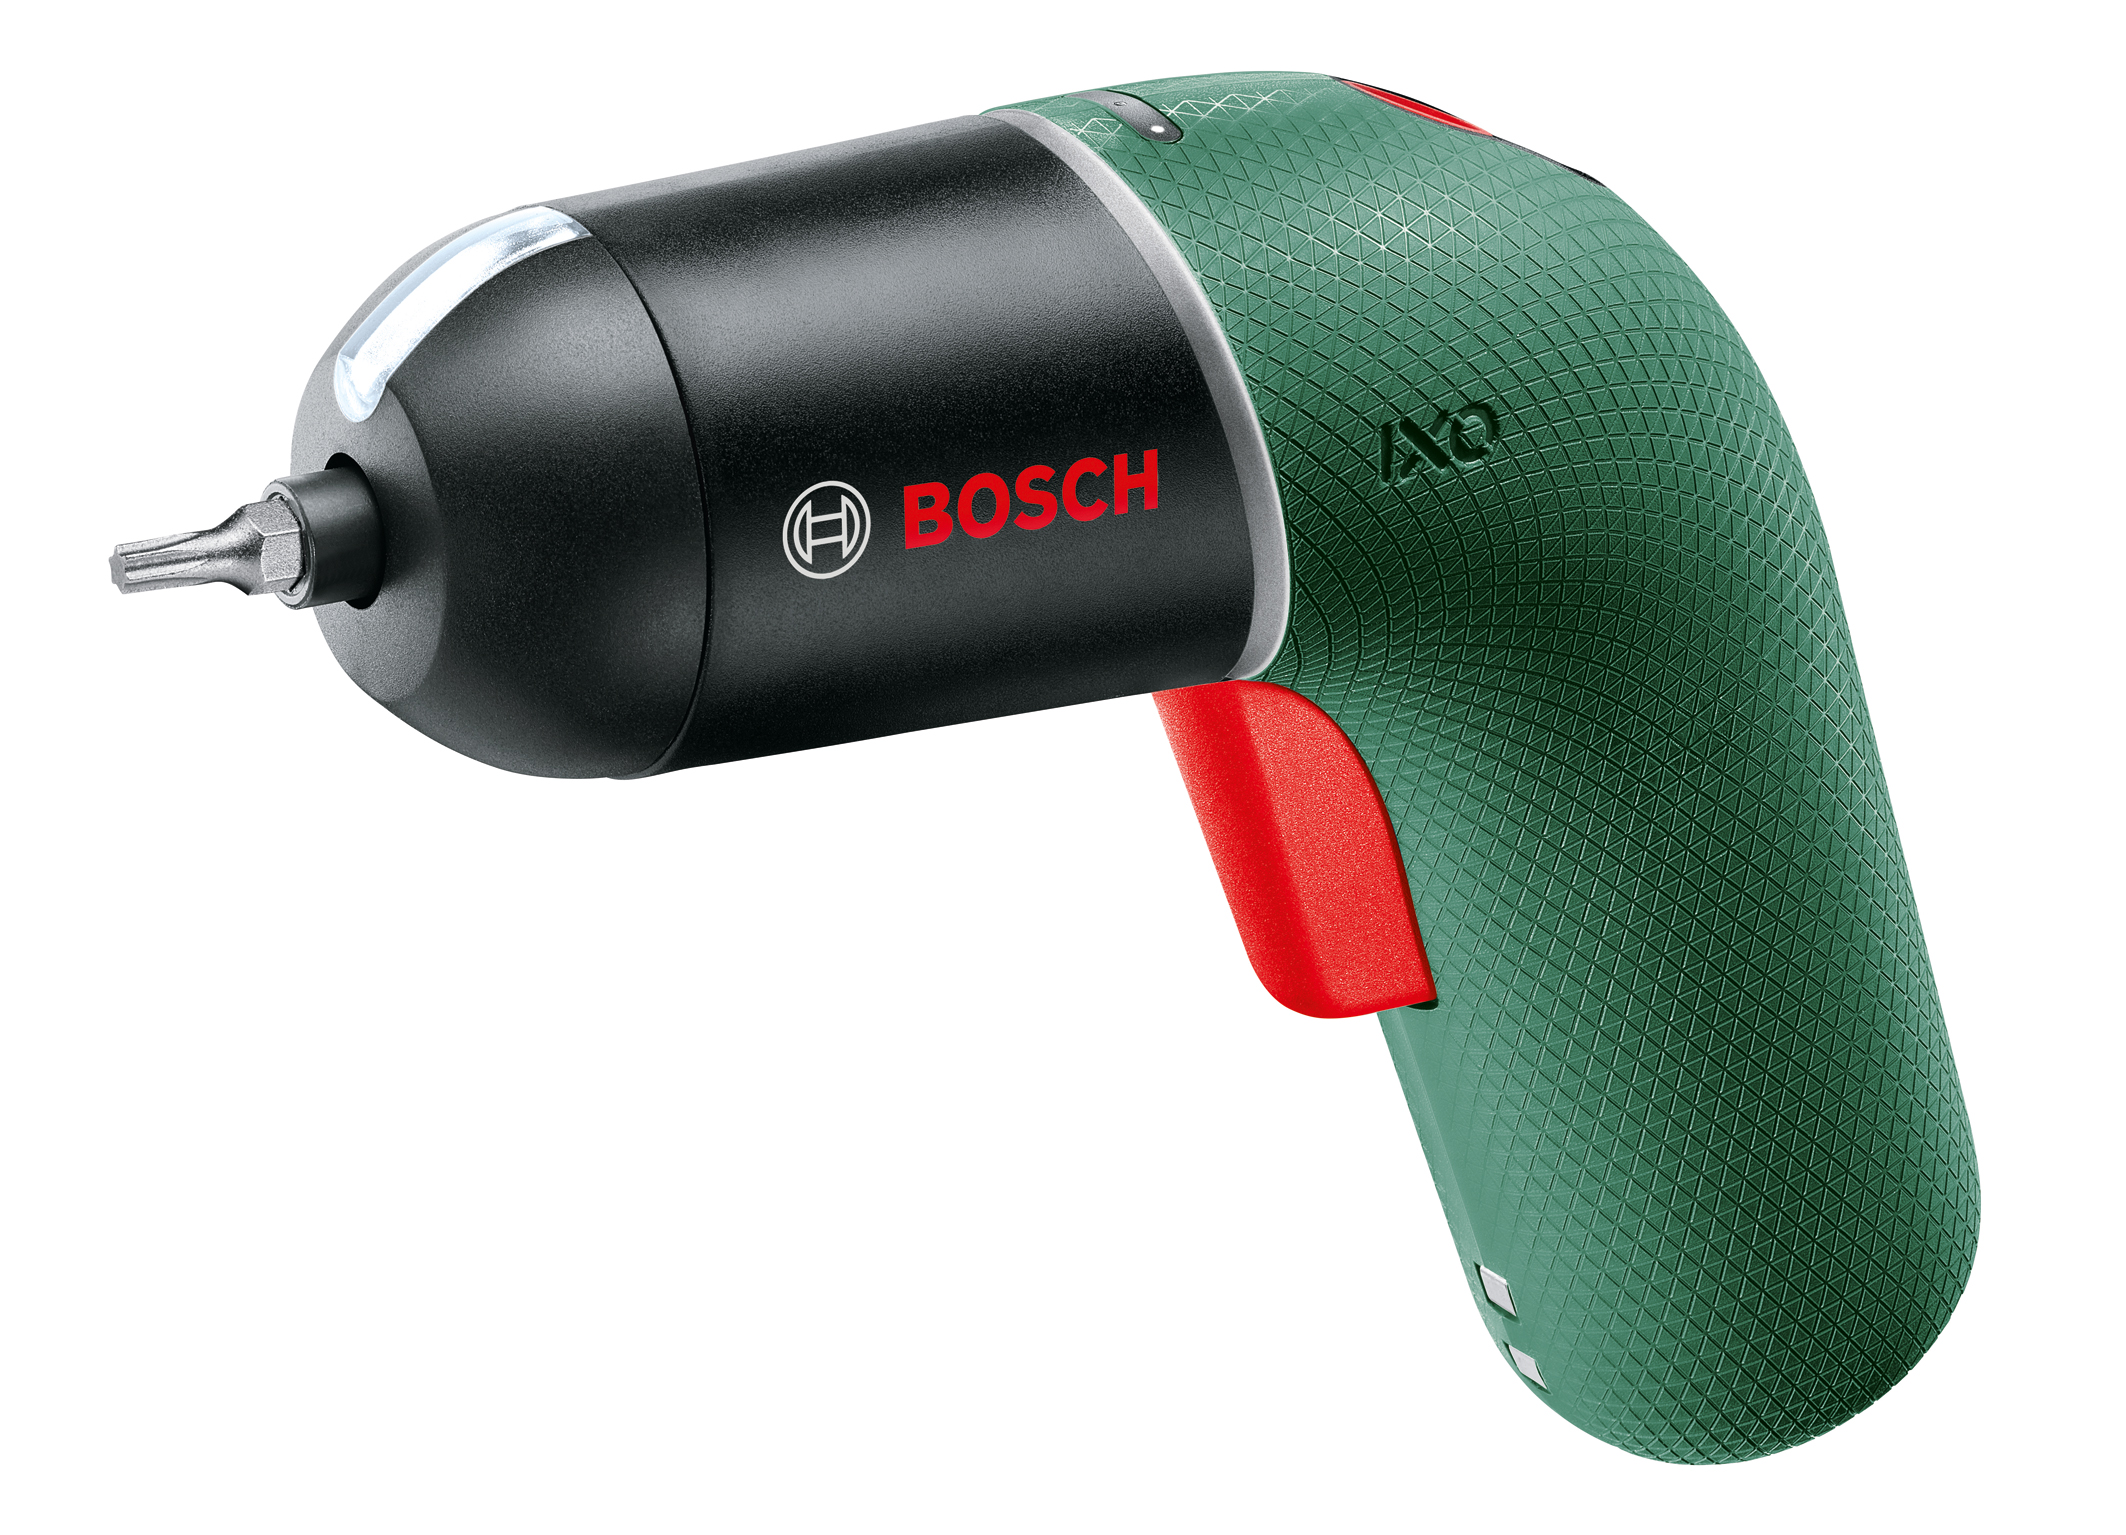 afslappet gaffel sej Classic design and 30 percent shorter charging time: The cult screwdriver  Ixo Classic is back - Bosch Media Service